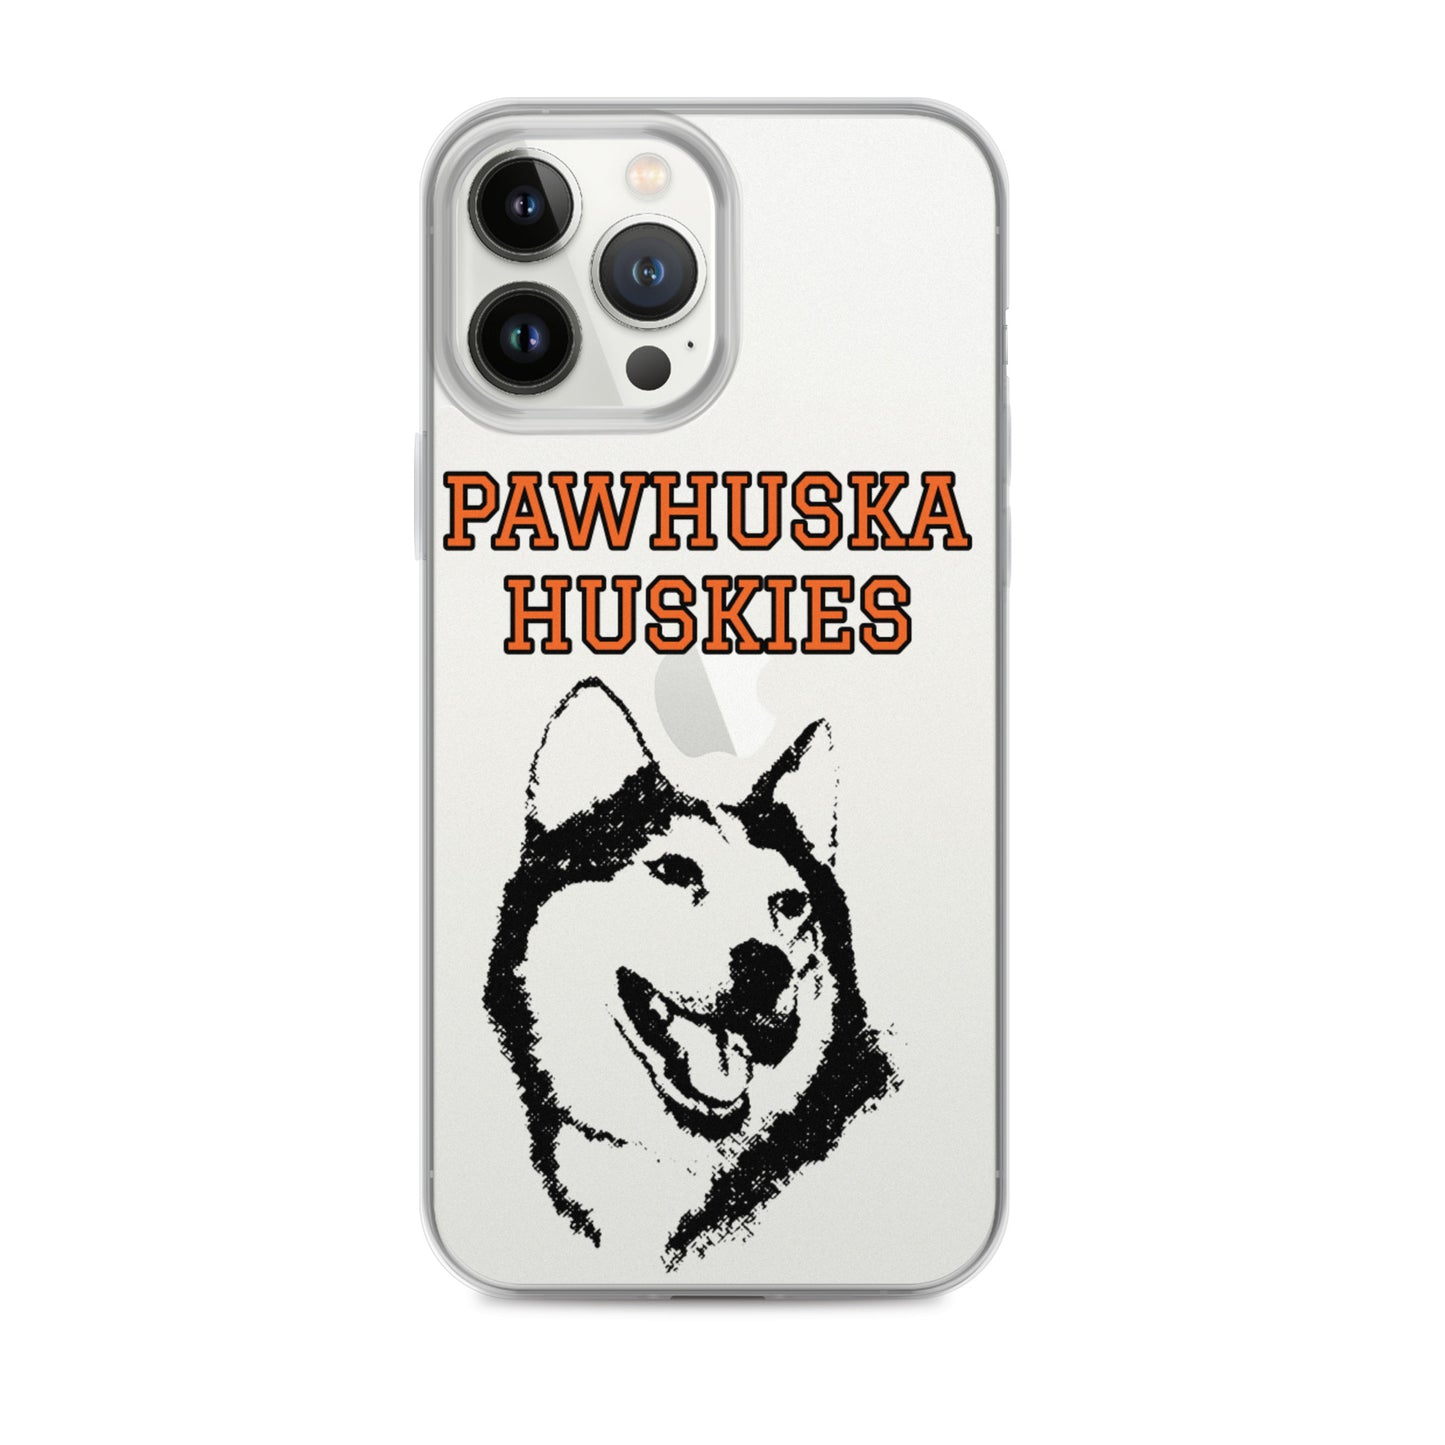 Huskies iPhone Case